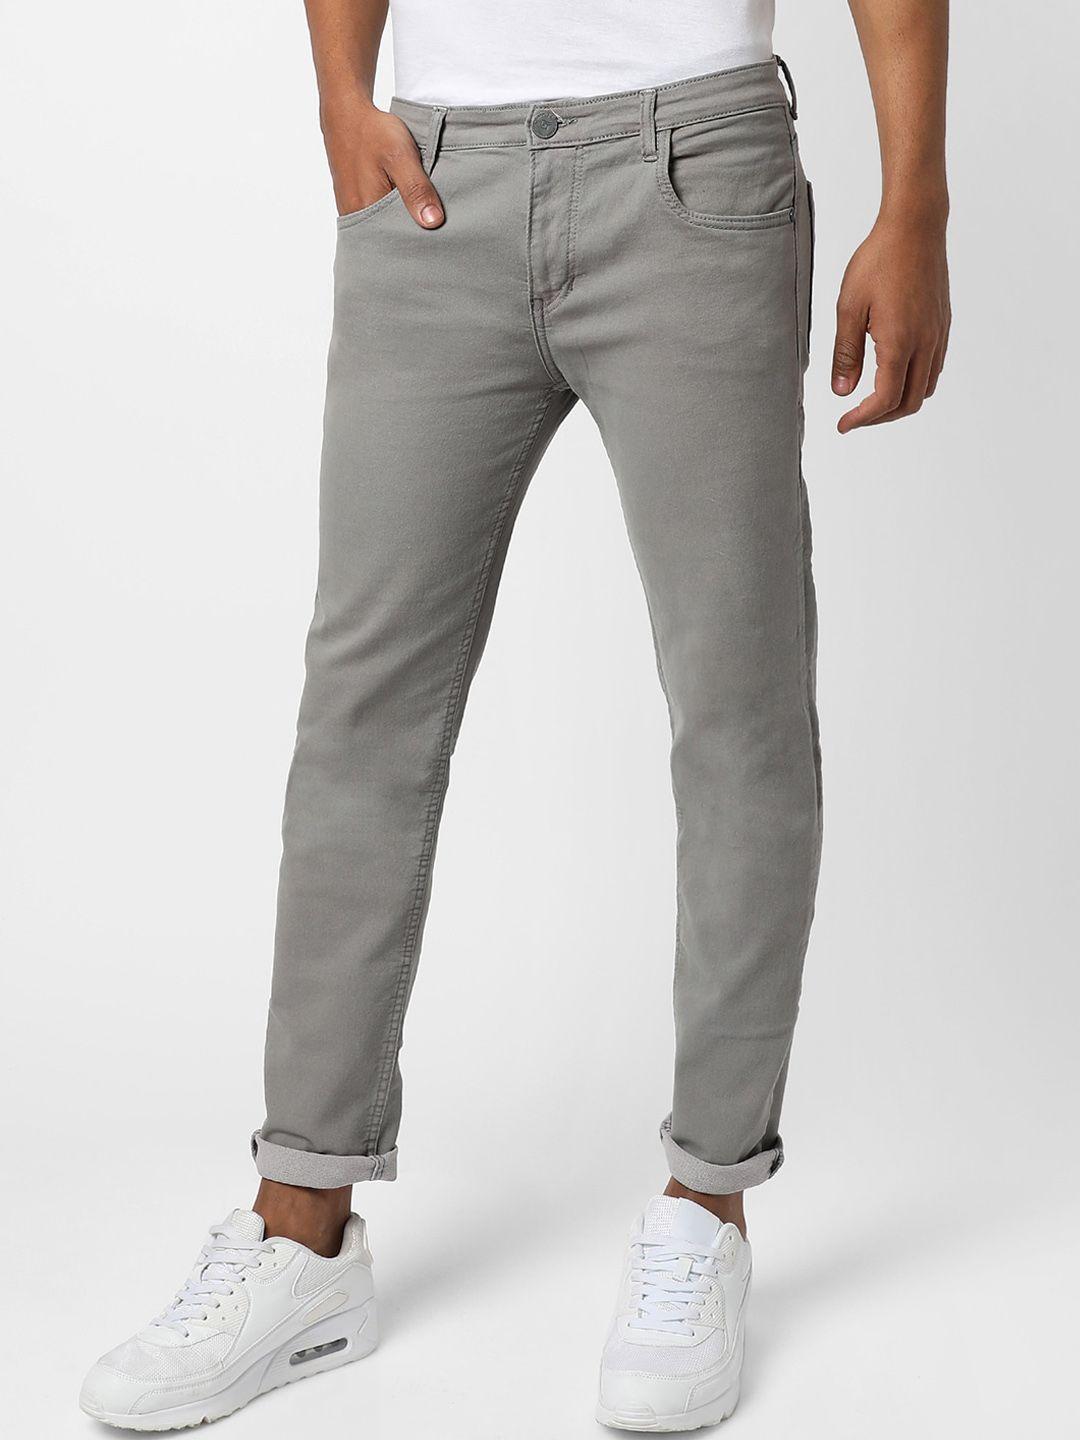 campus-sutra-men-grey-smart-slim-fit-stretchable-jeans